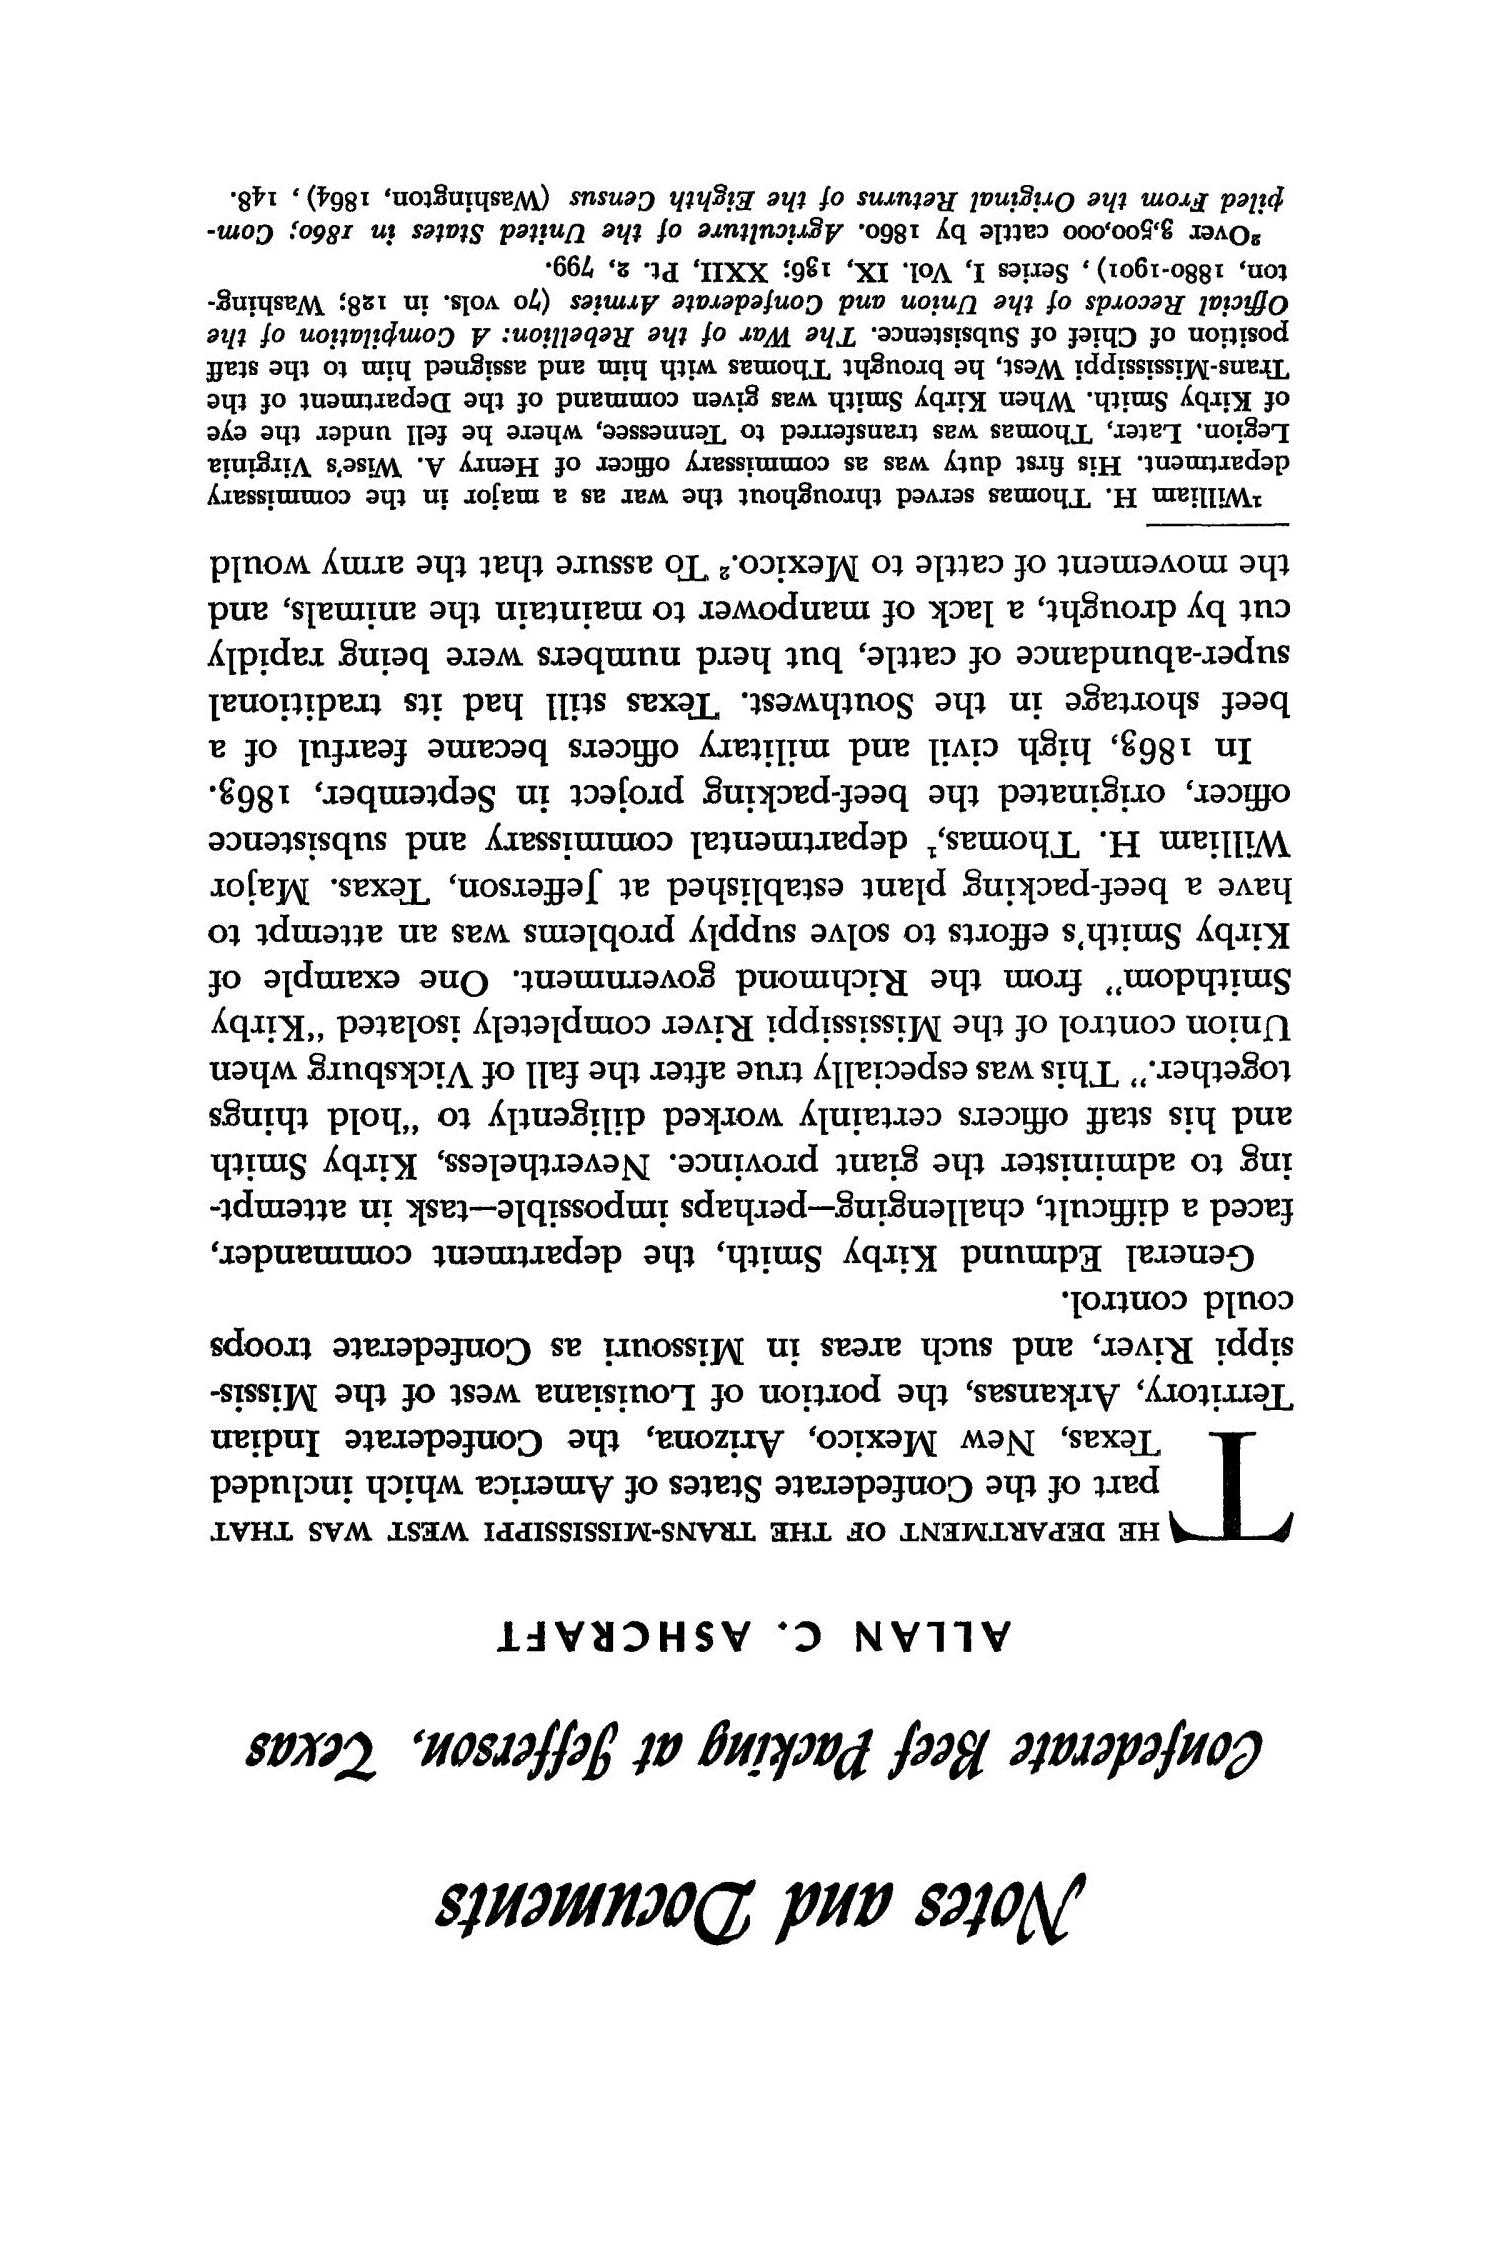 The Southwestern Historical Quarterly, Volume 68, July 1964 - April, 1965
                                                
                                                    259
                                                